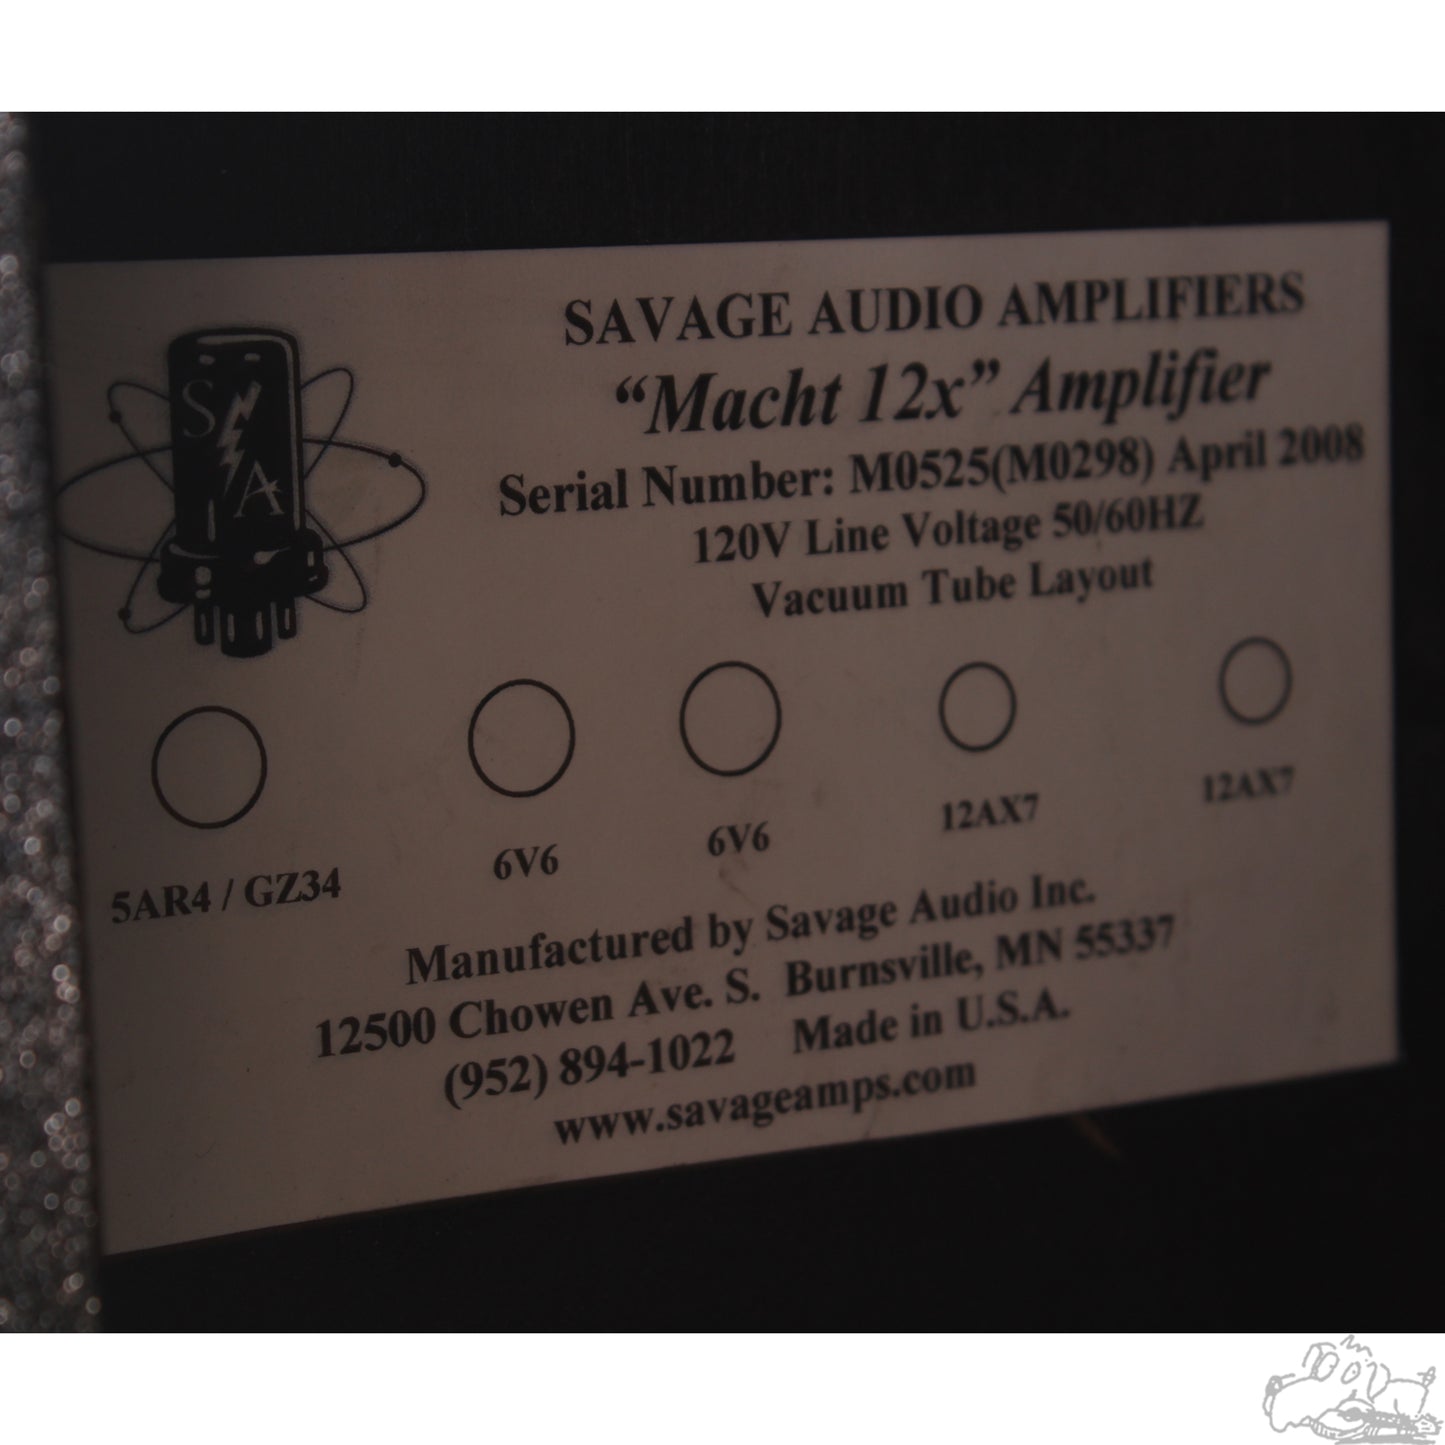 2008 Savage Audio Macht 12X